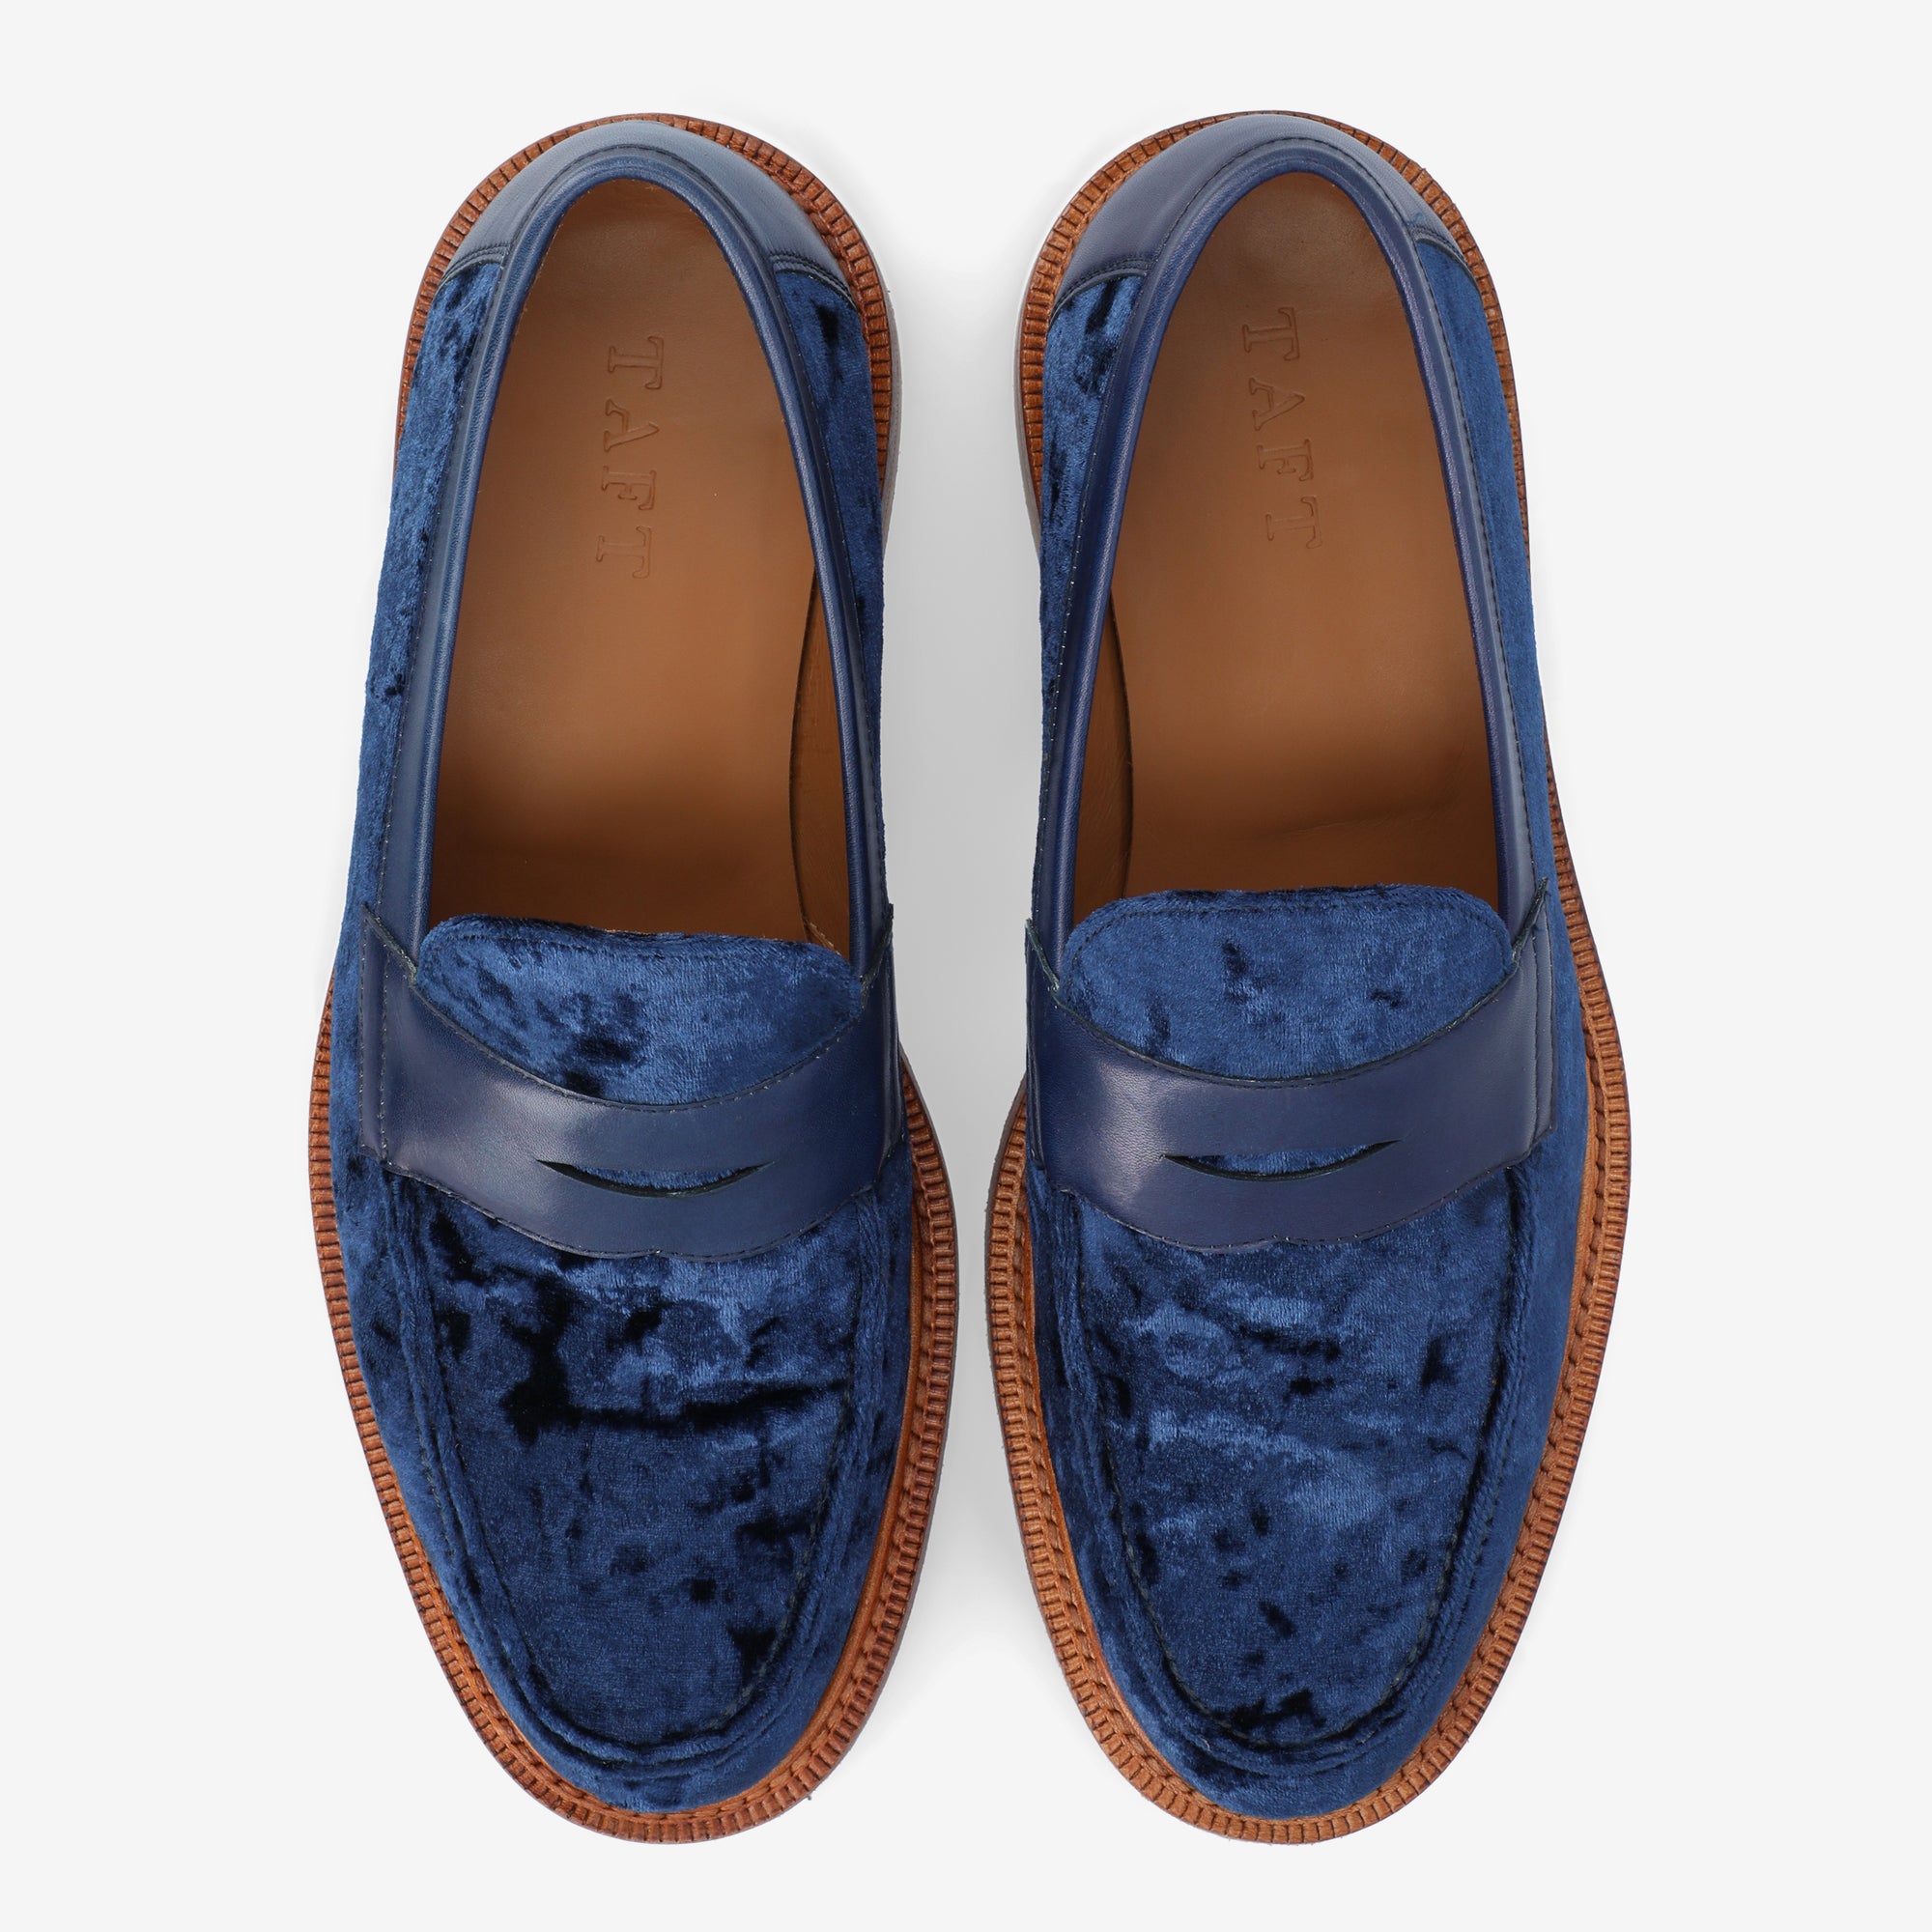 Cobalt Blue Suede - World's Most Comfortable Loafer